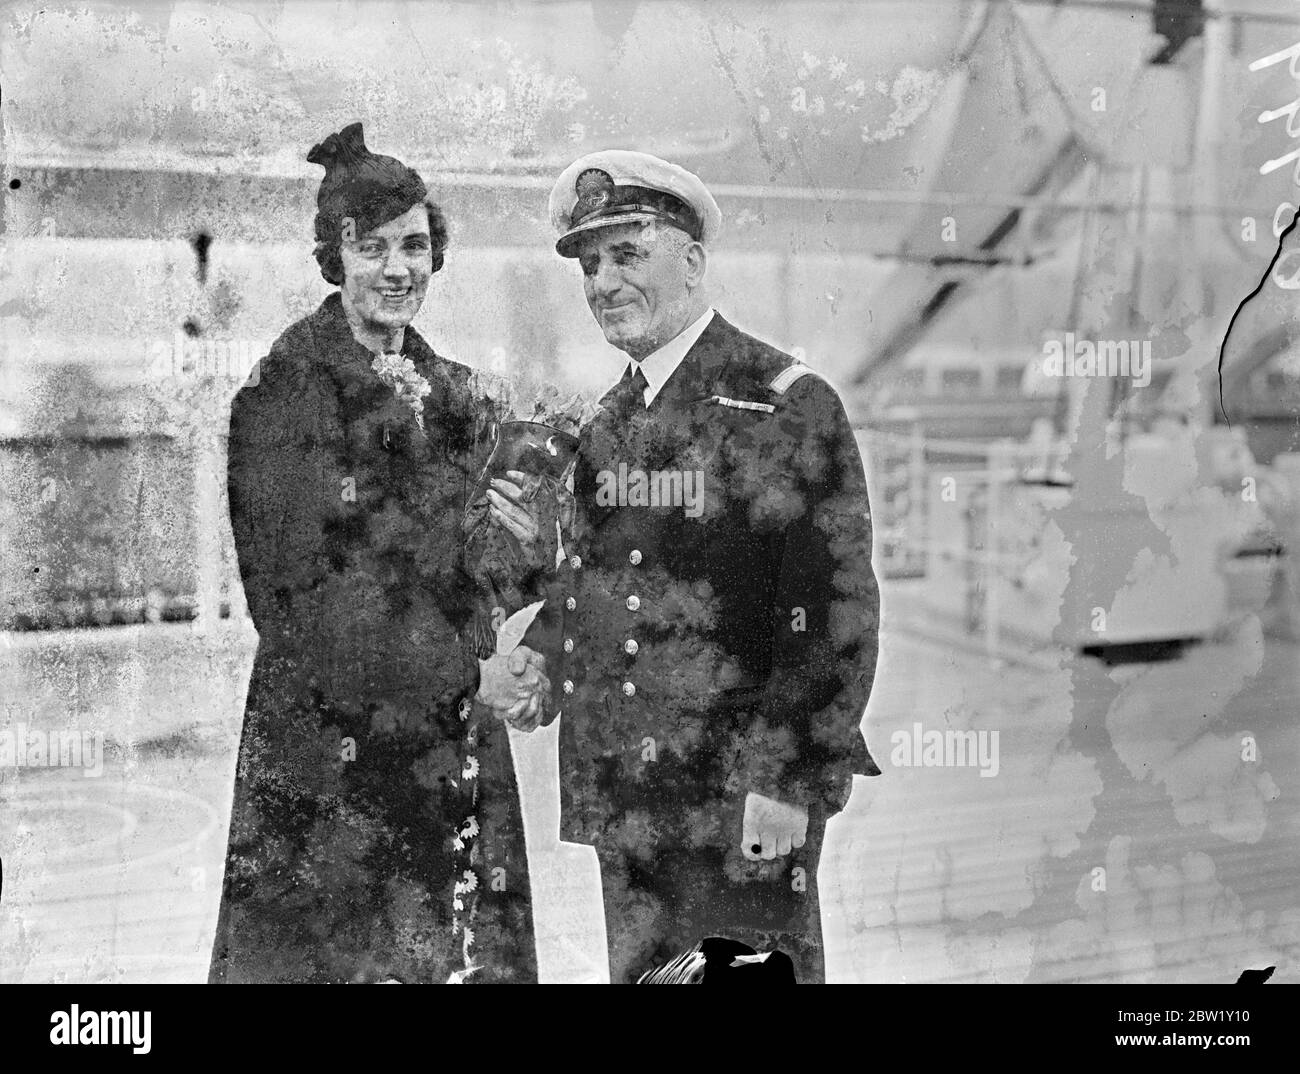 Stabskapitän EEH Starling von RMS Strathnaver Ocean Liner der Peninsular and Oriental Steam Navigation Company (P&O). Mit Miss Sheila Martin. Stockfoto